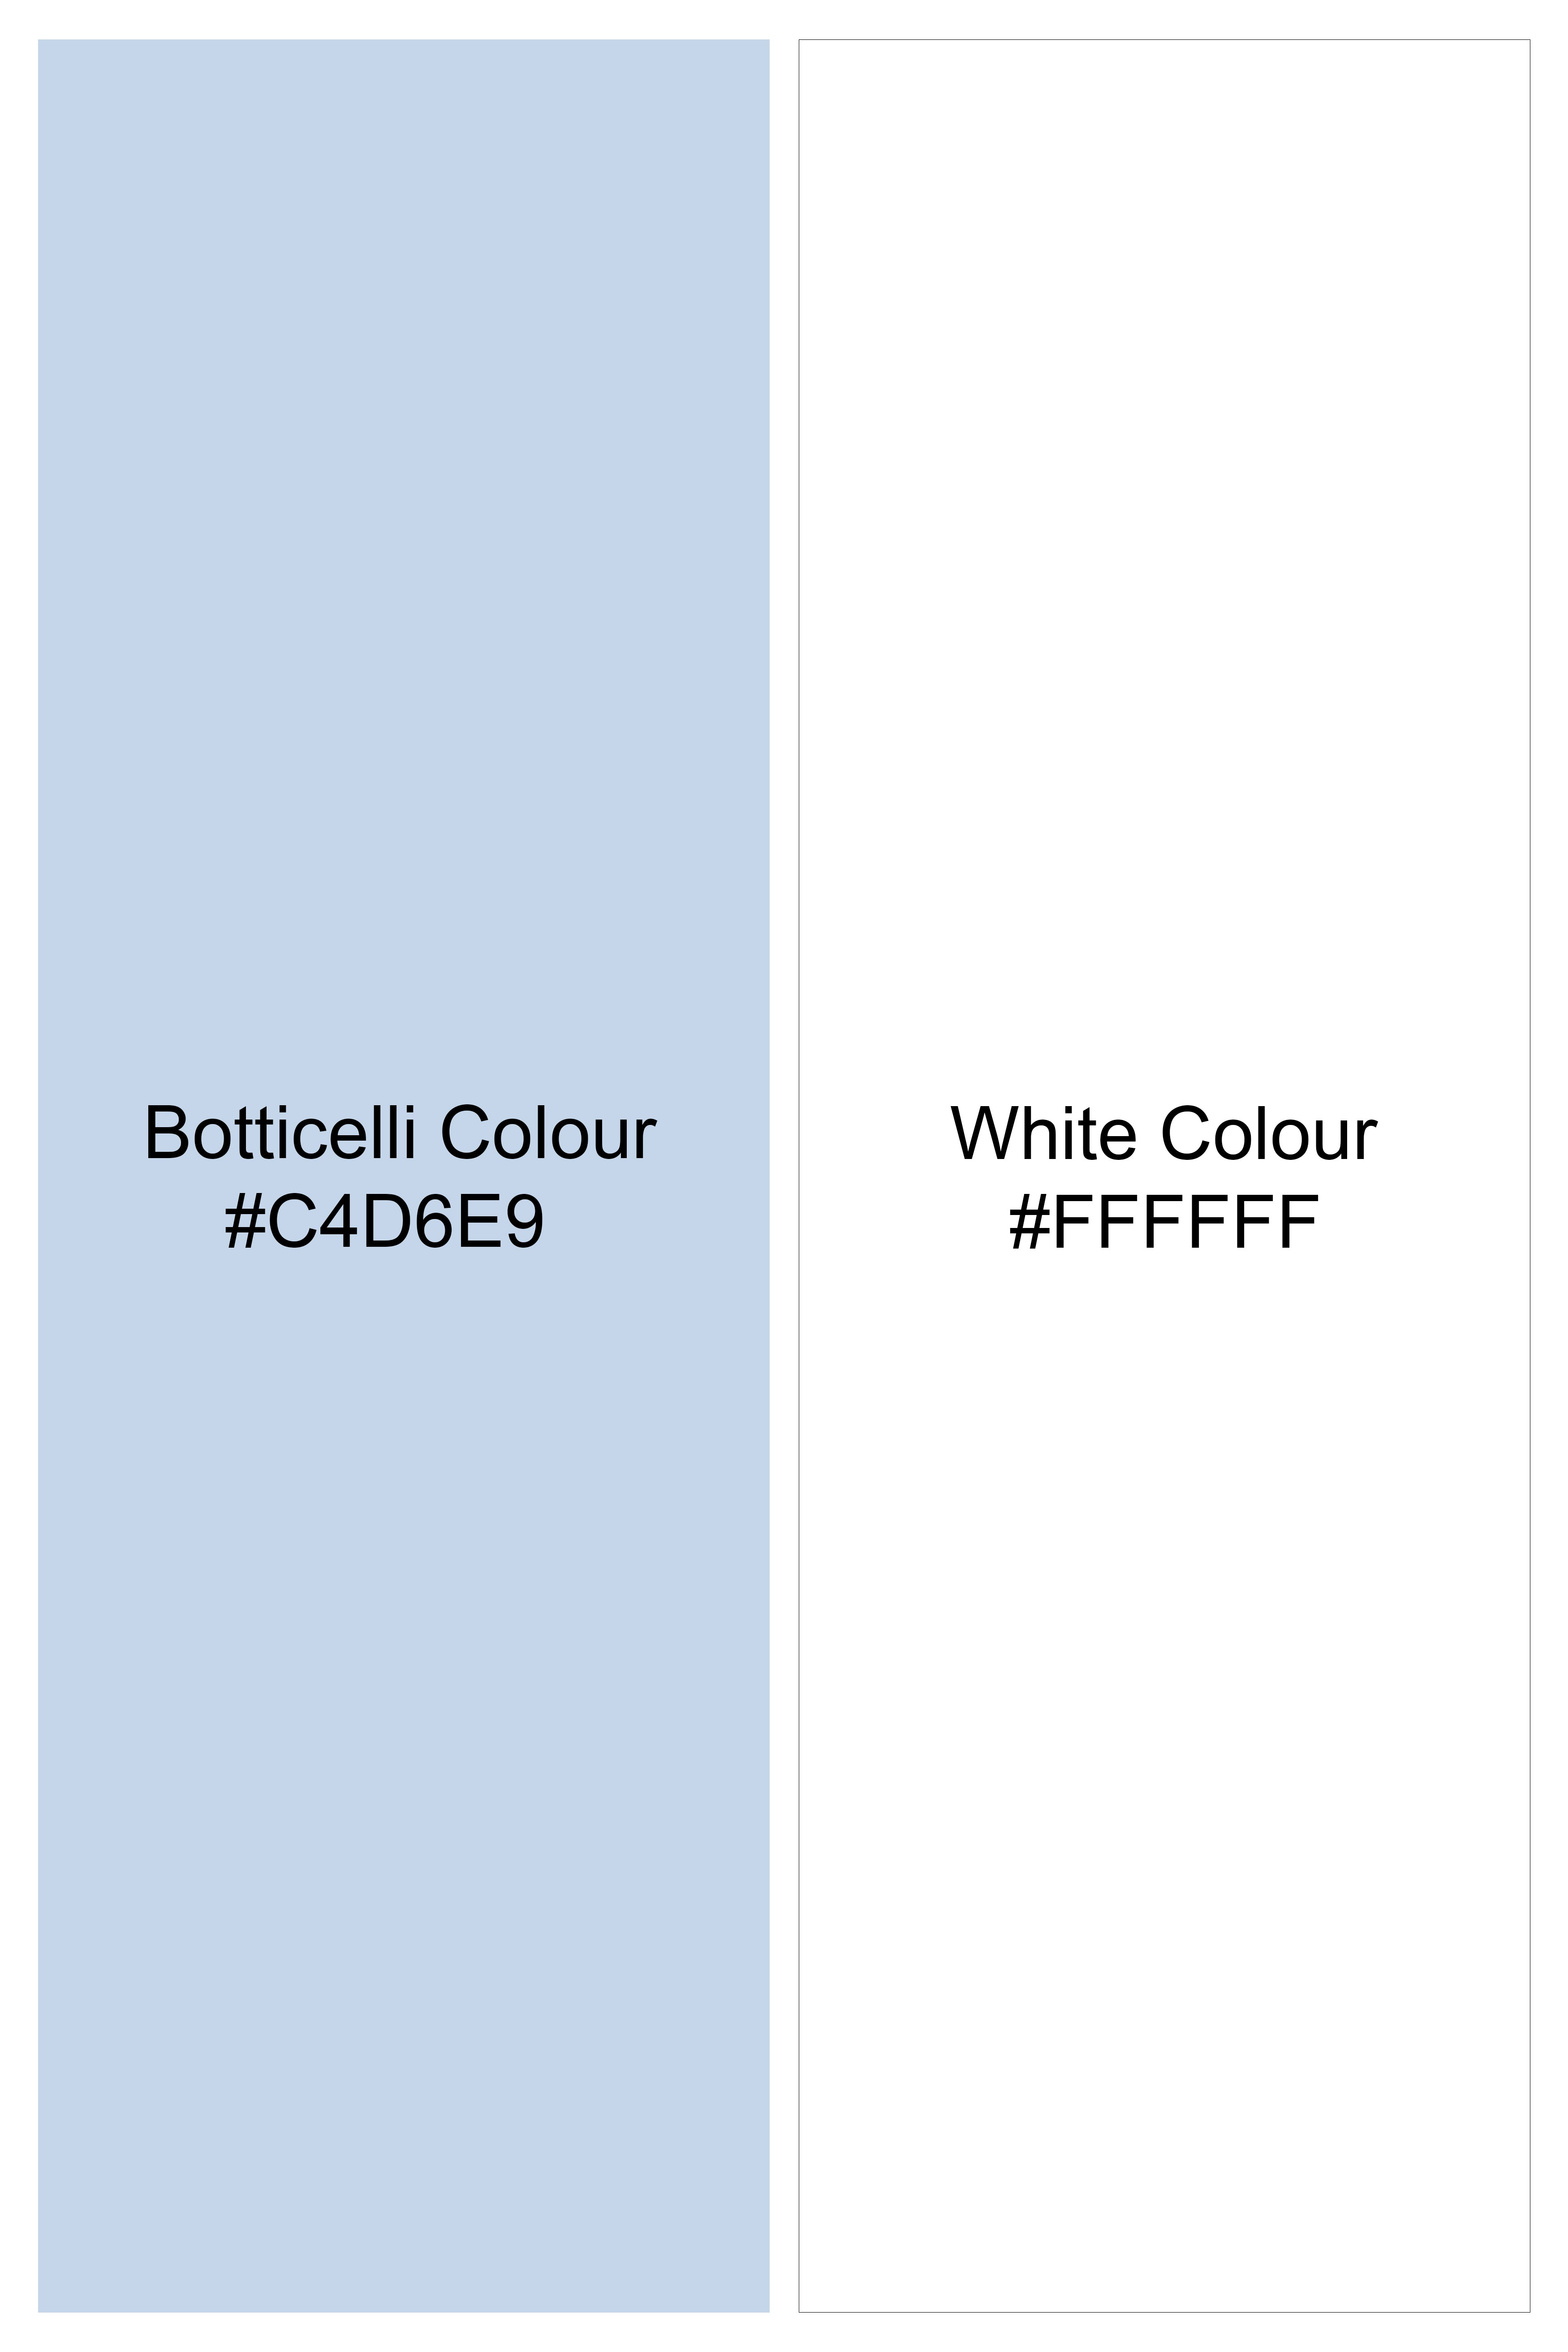 Botticelli Blue and White Jacquard Textured Premium Giza Cotton Shirt